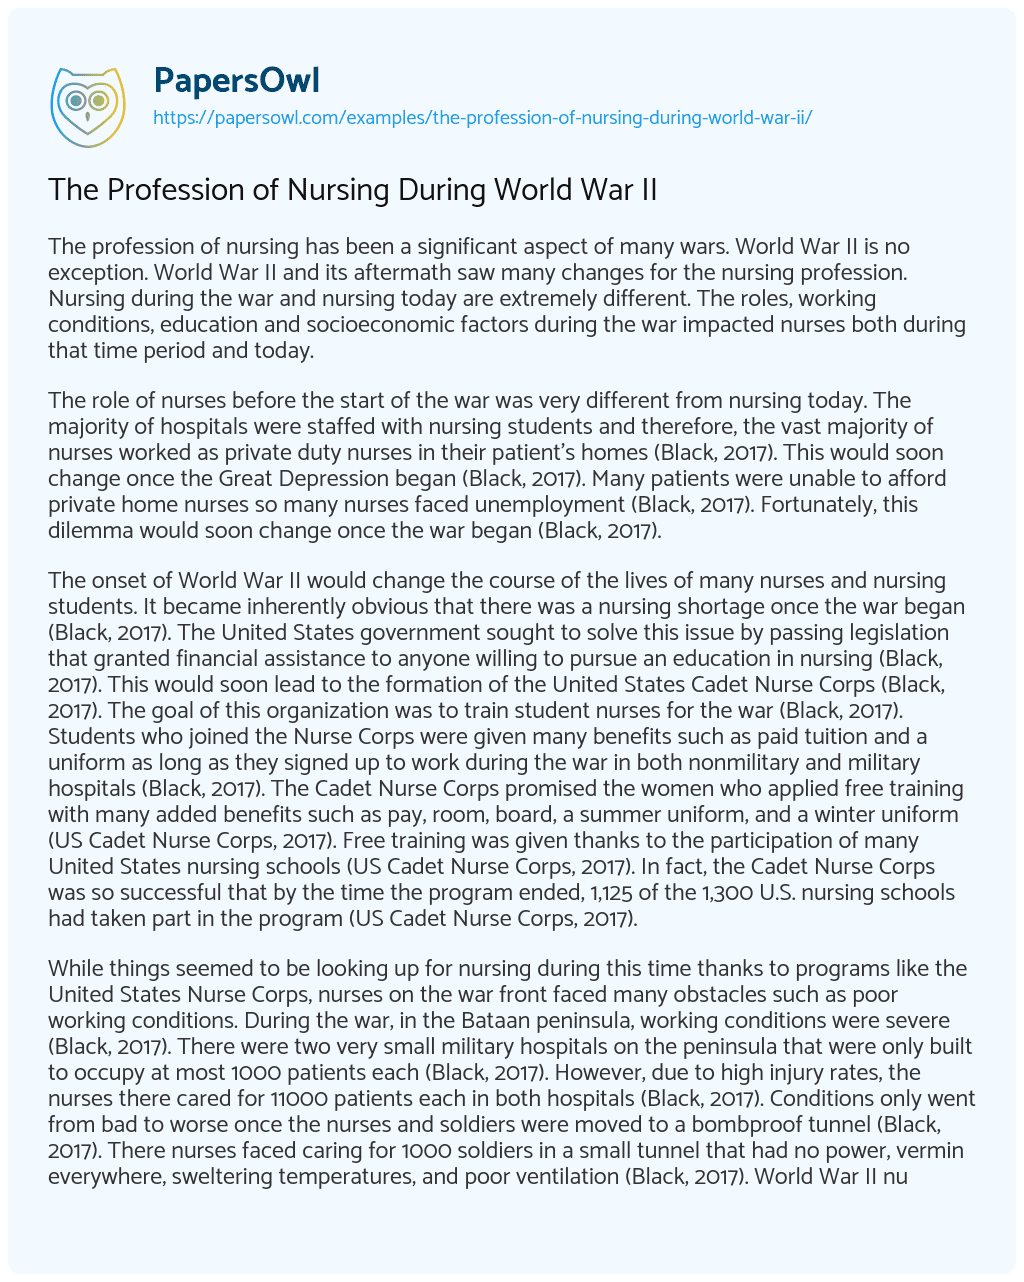 Essay on The Profession of Nursing during World War II